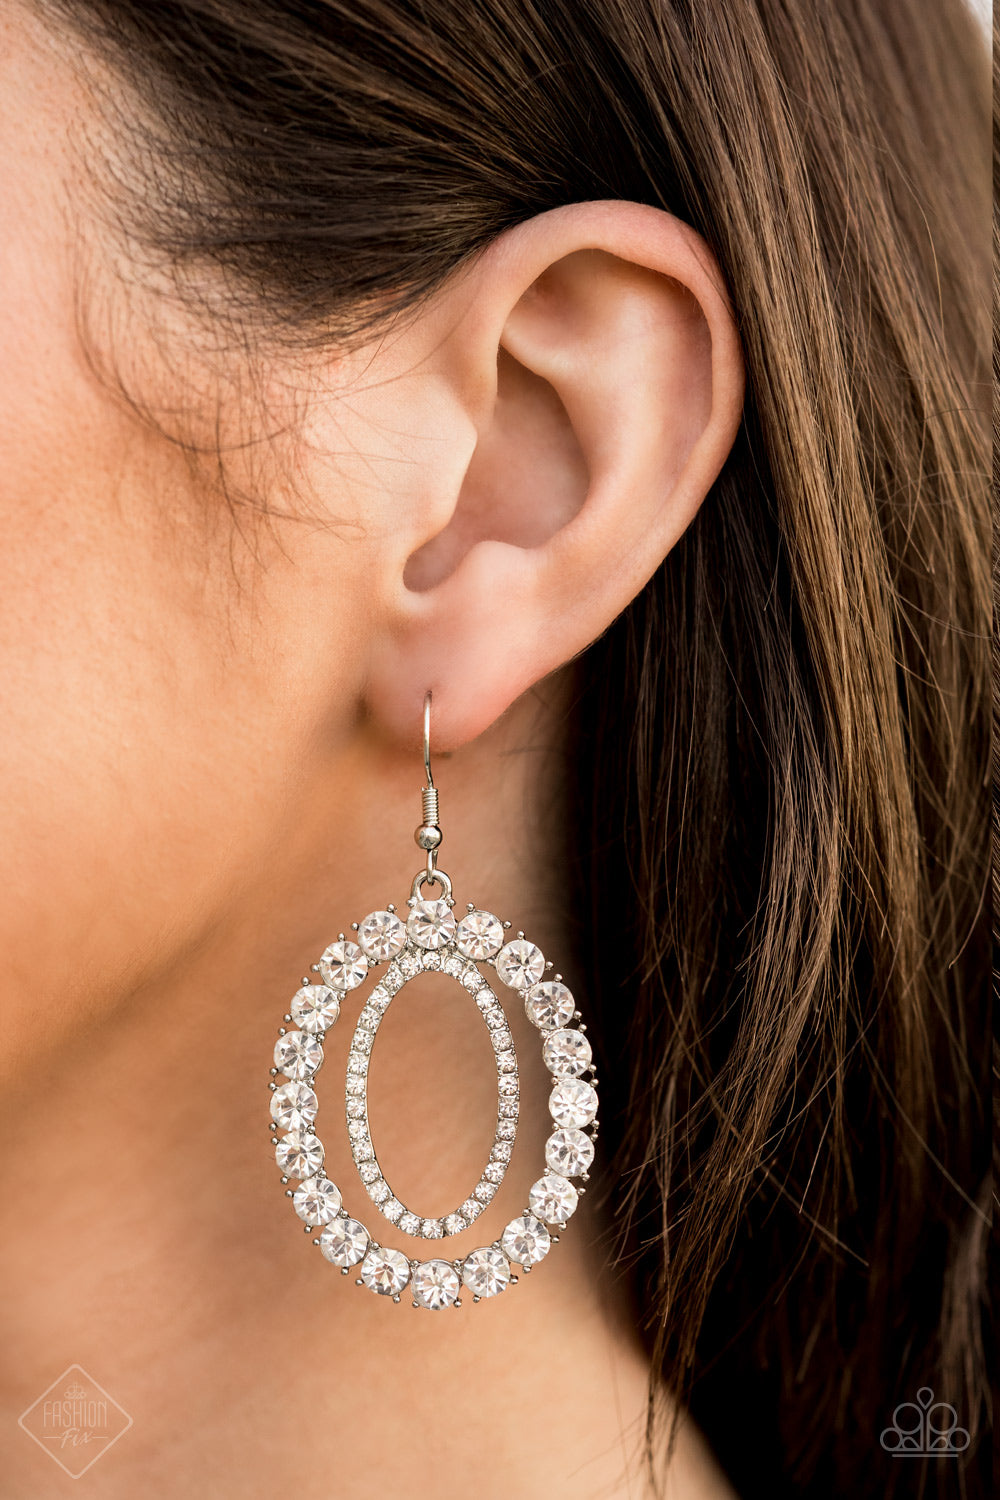 Deluxe Luxury White Earring Paparazzi Accessories